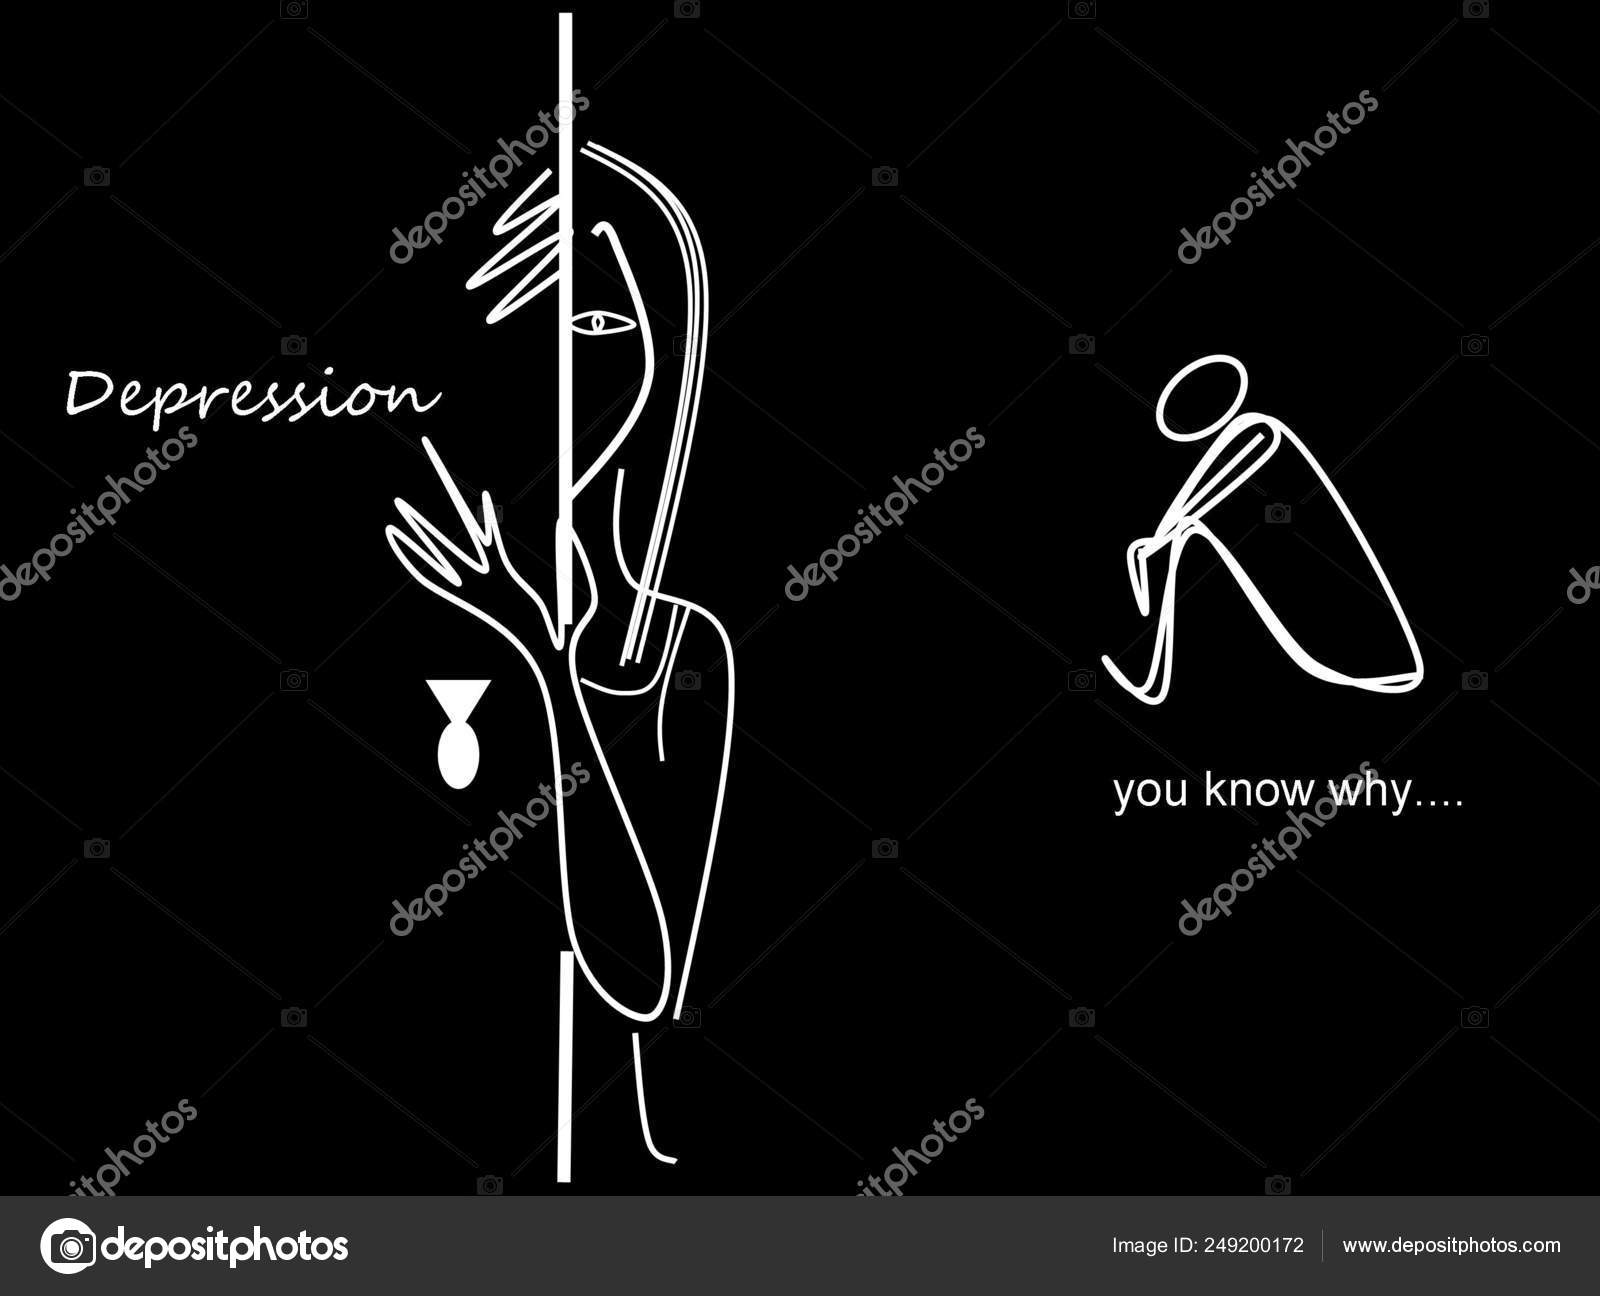 Depression Alone Man Alone Woman Black White Picture Illustration Background  Stock Photo by ©.az 249200172